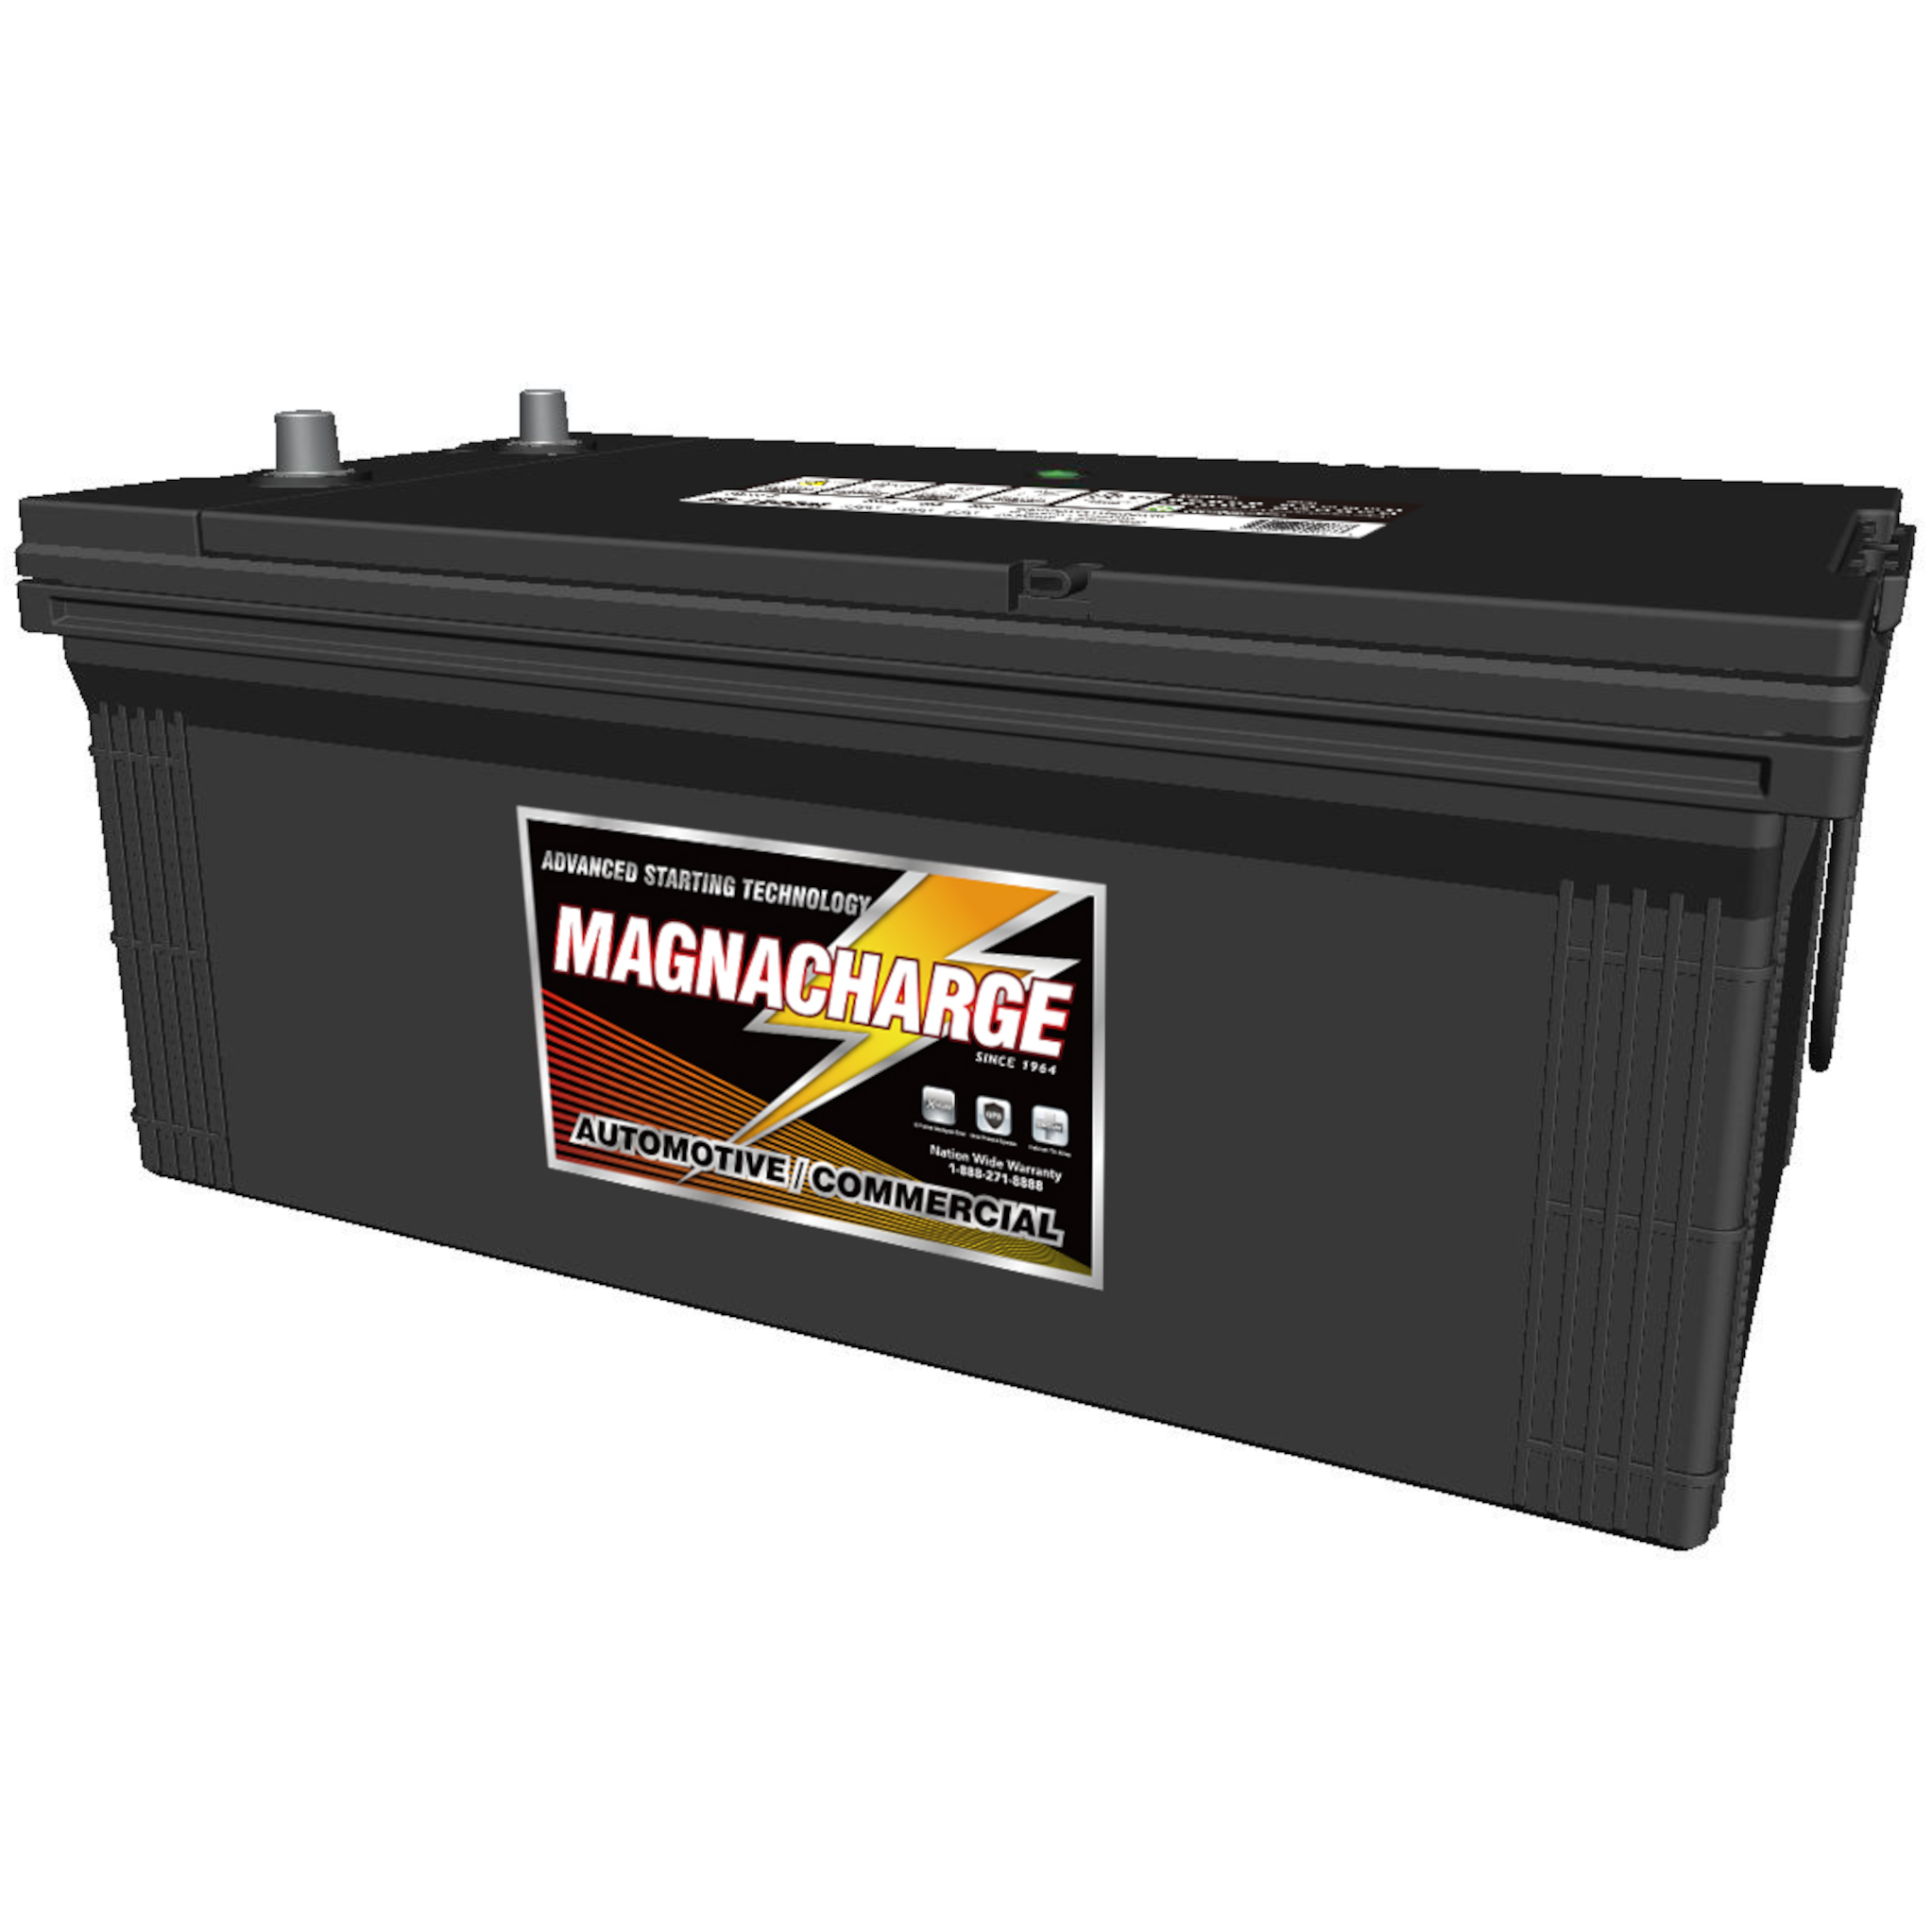 Magnacharge 8D-1600M Group 8D Tuck Battery